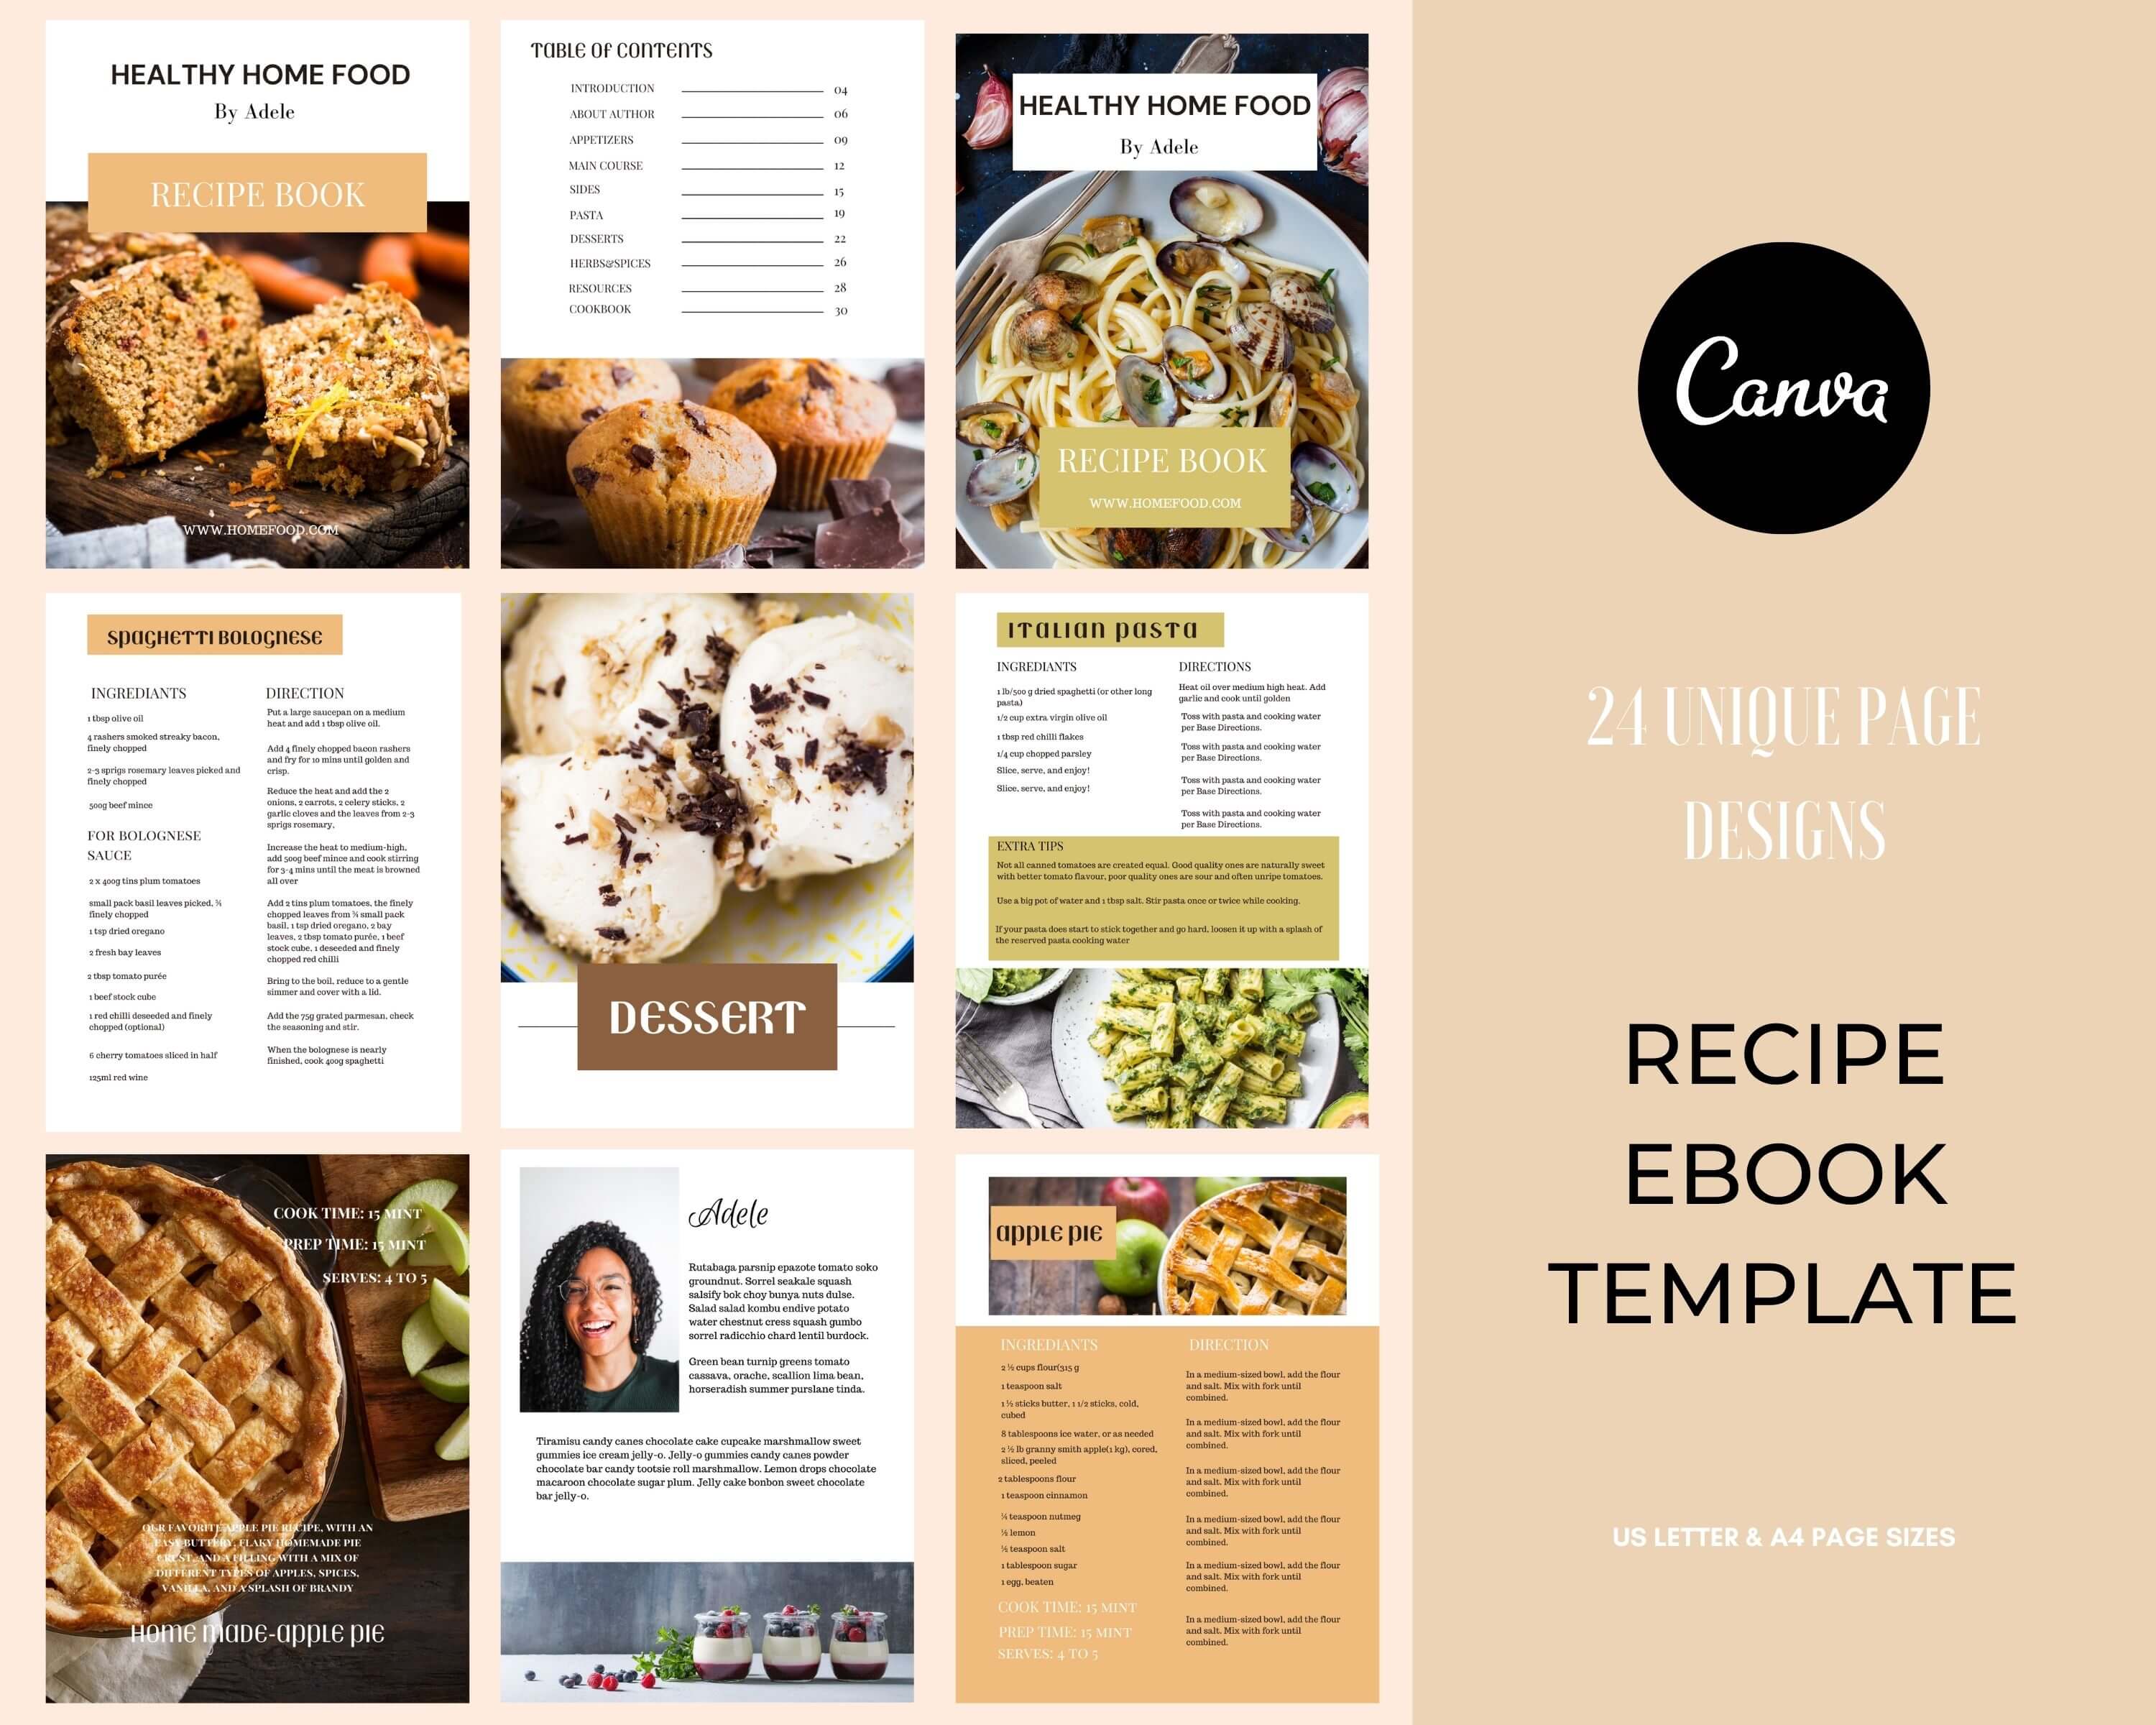 Recipe Ebook template for canva